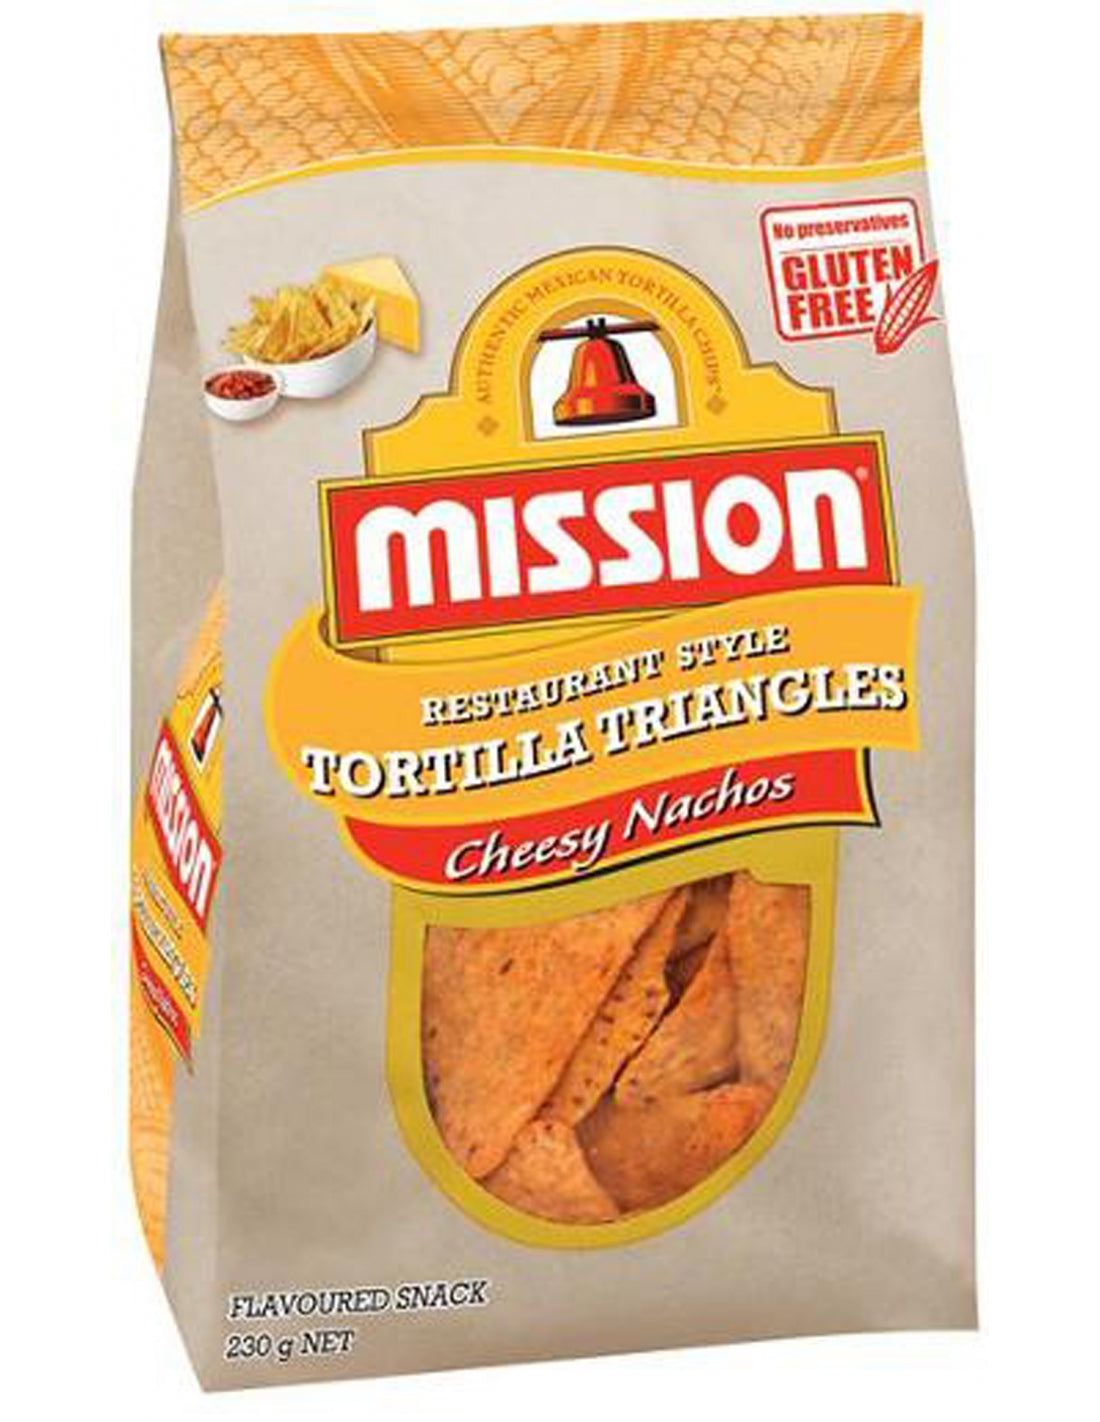 Mission Tortilla Triangles Cheesy Nachos 230g